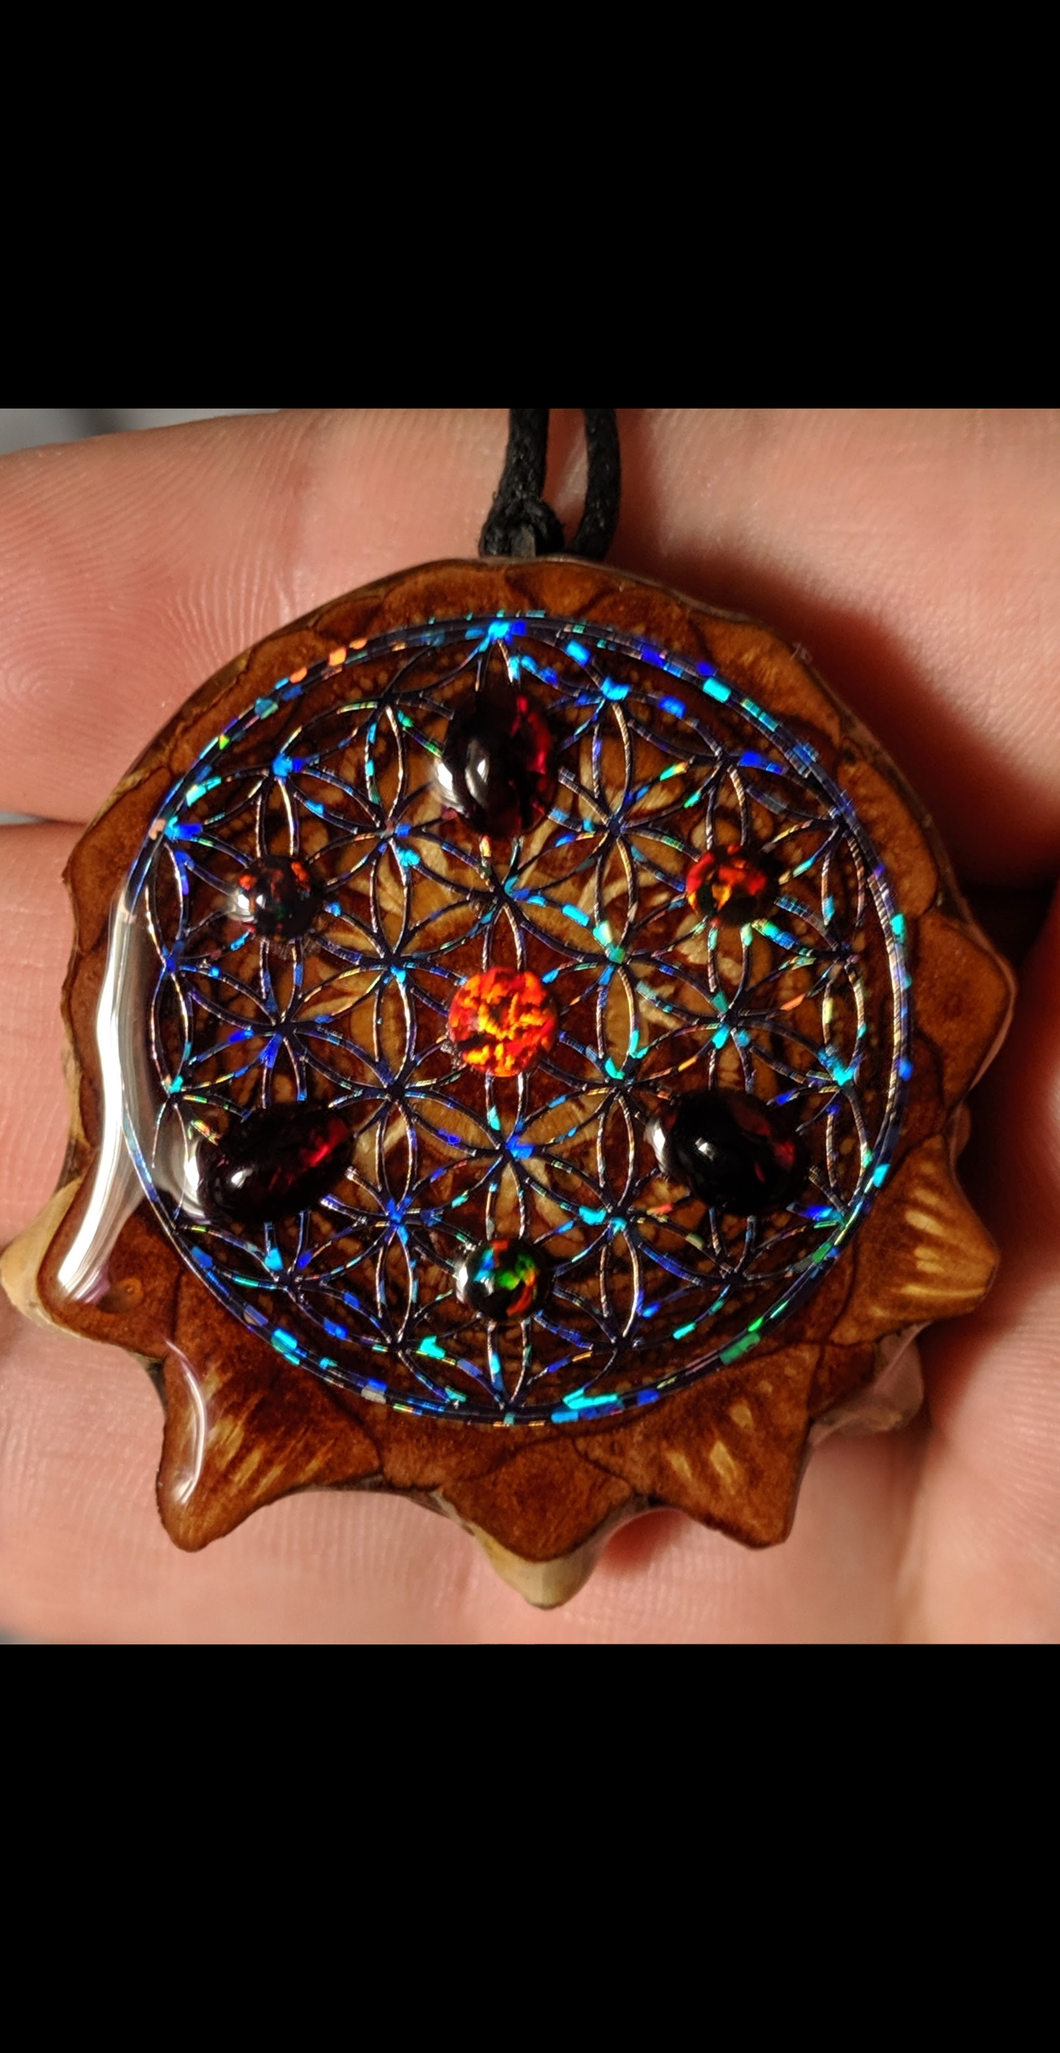 4 black opals with 3 garnet's over blackout flower of life